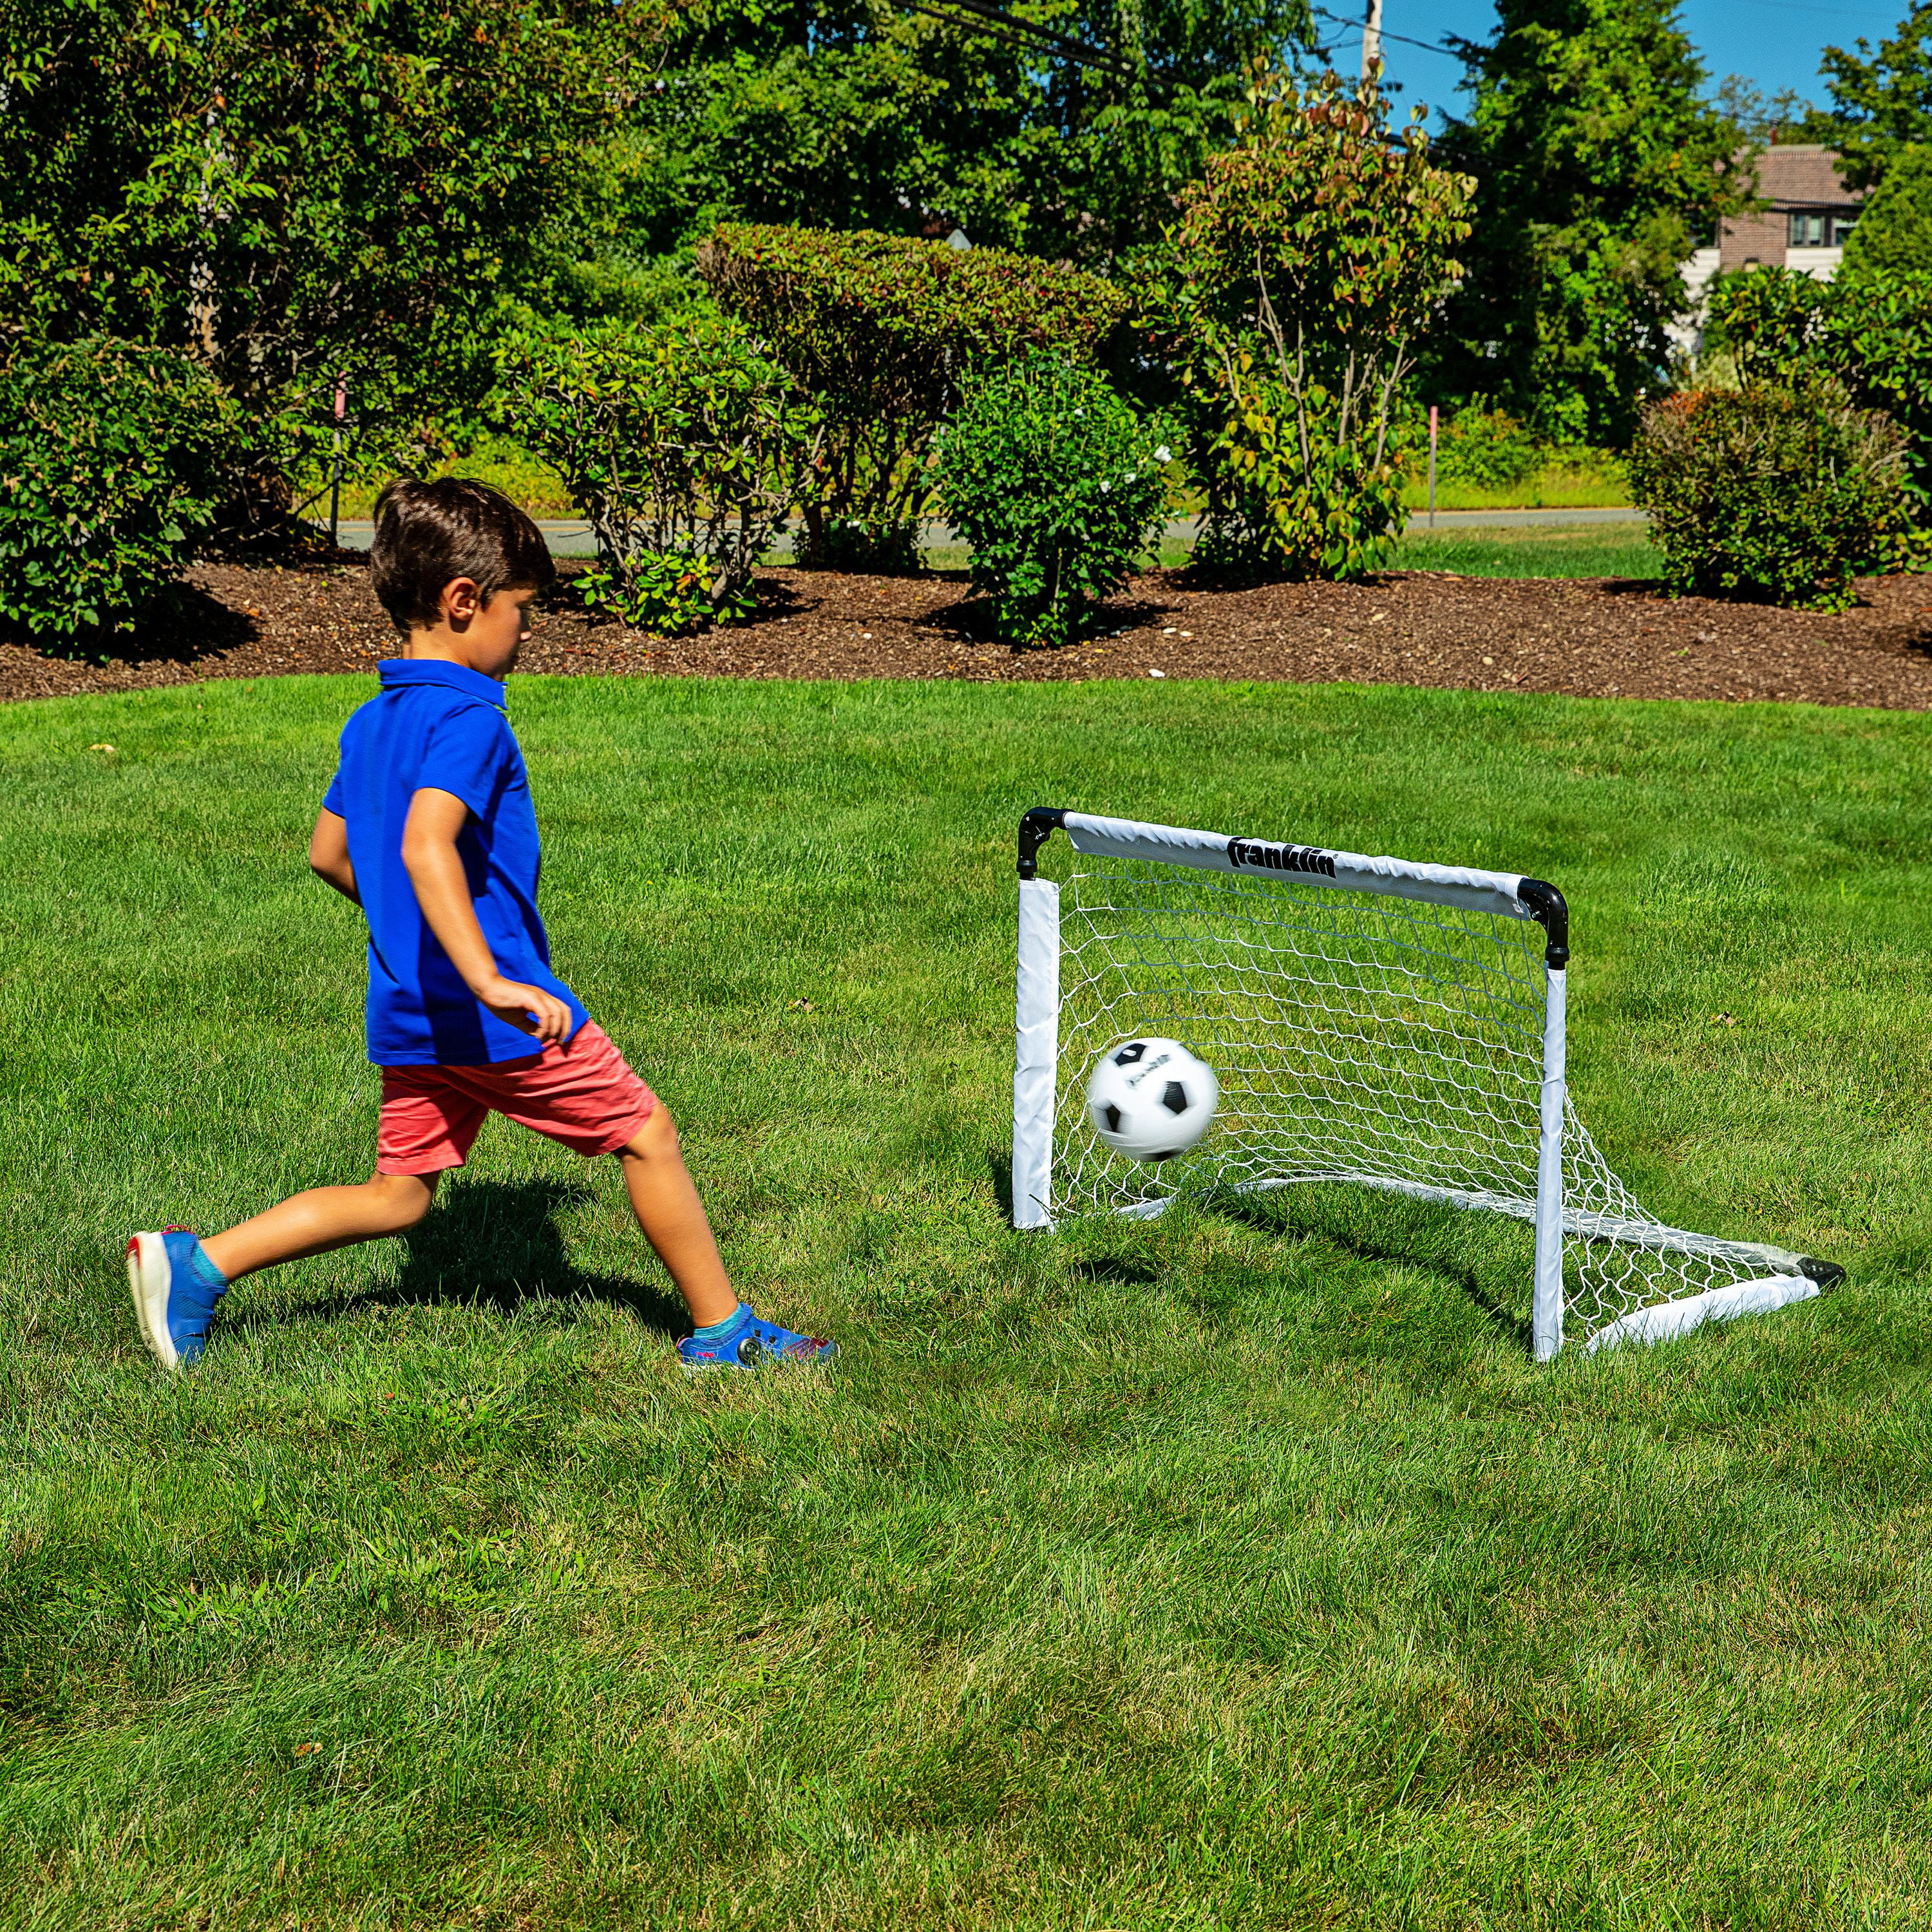 Franklin Sports Kids Soccer Goal Set ... Portable Backyard Youth Soccer Goals 